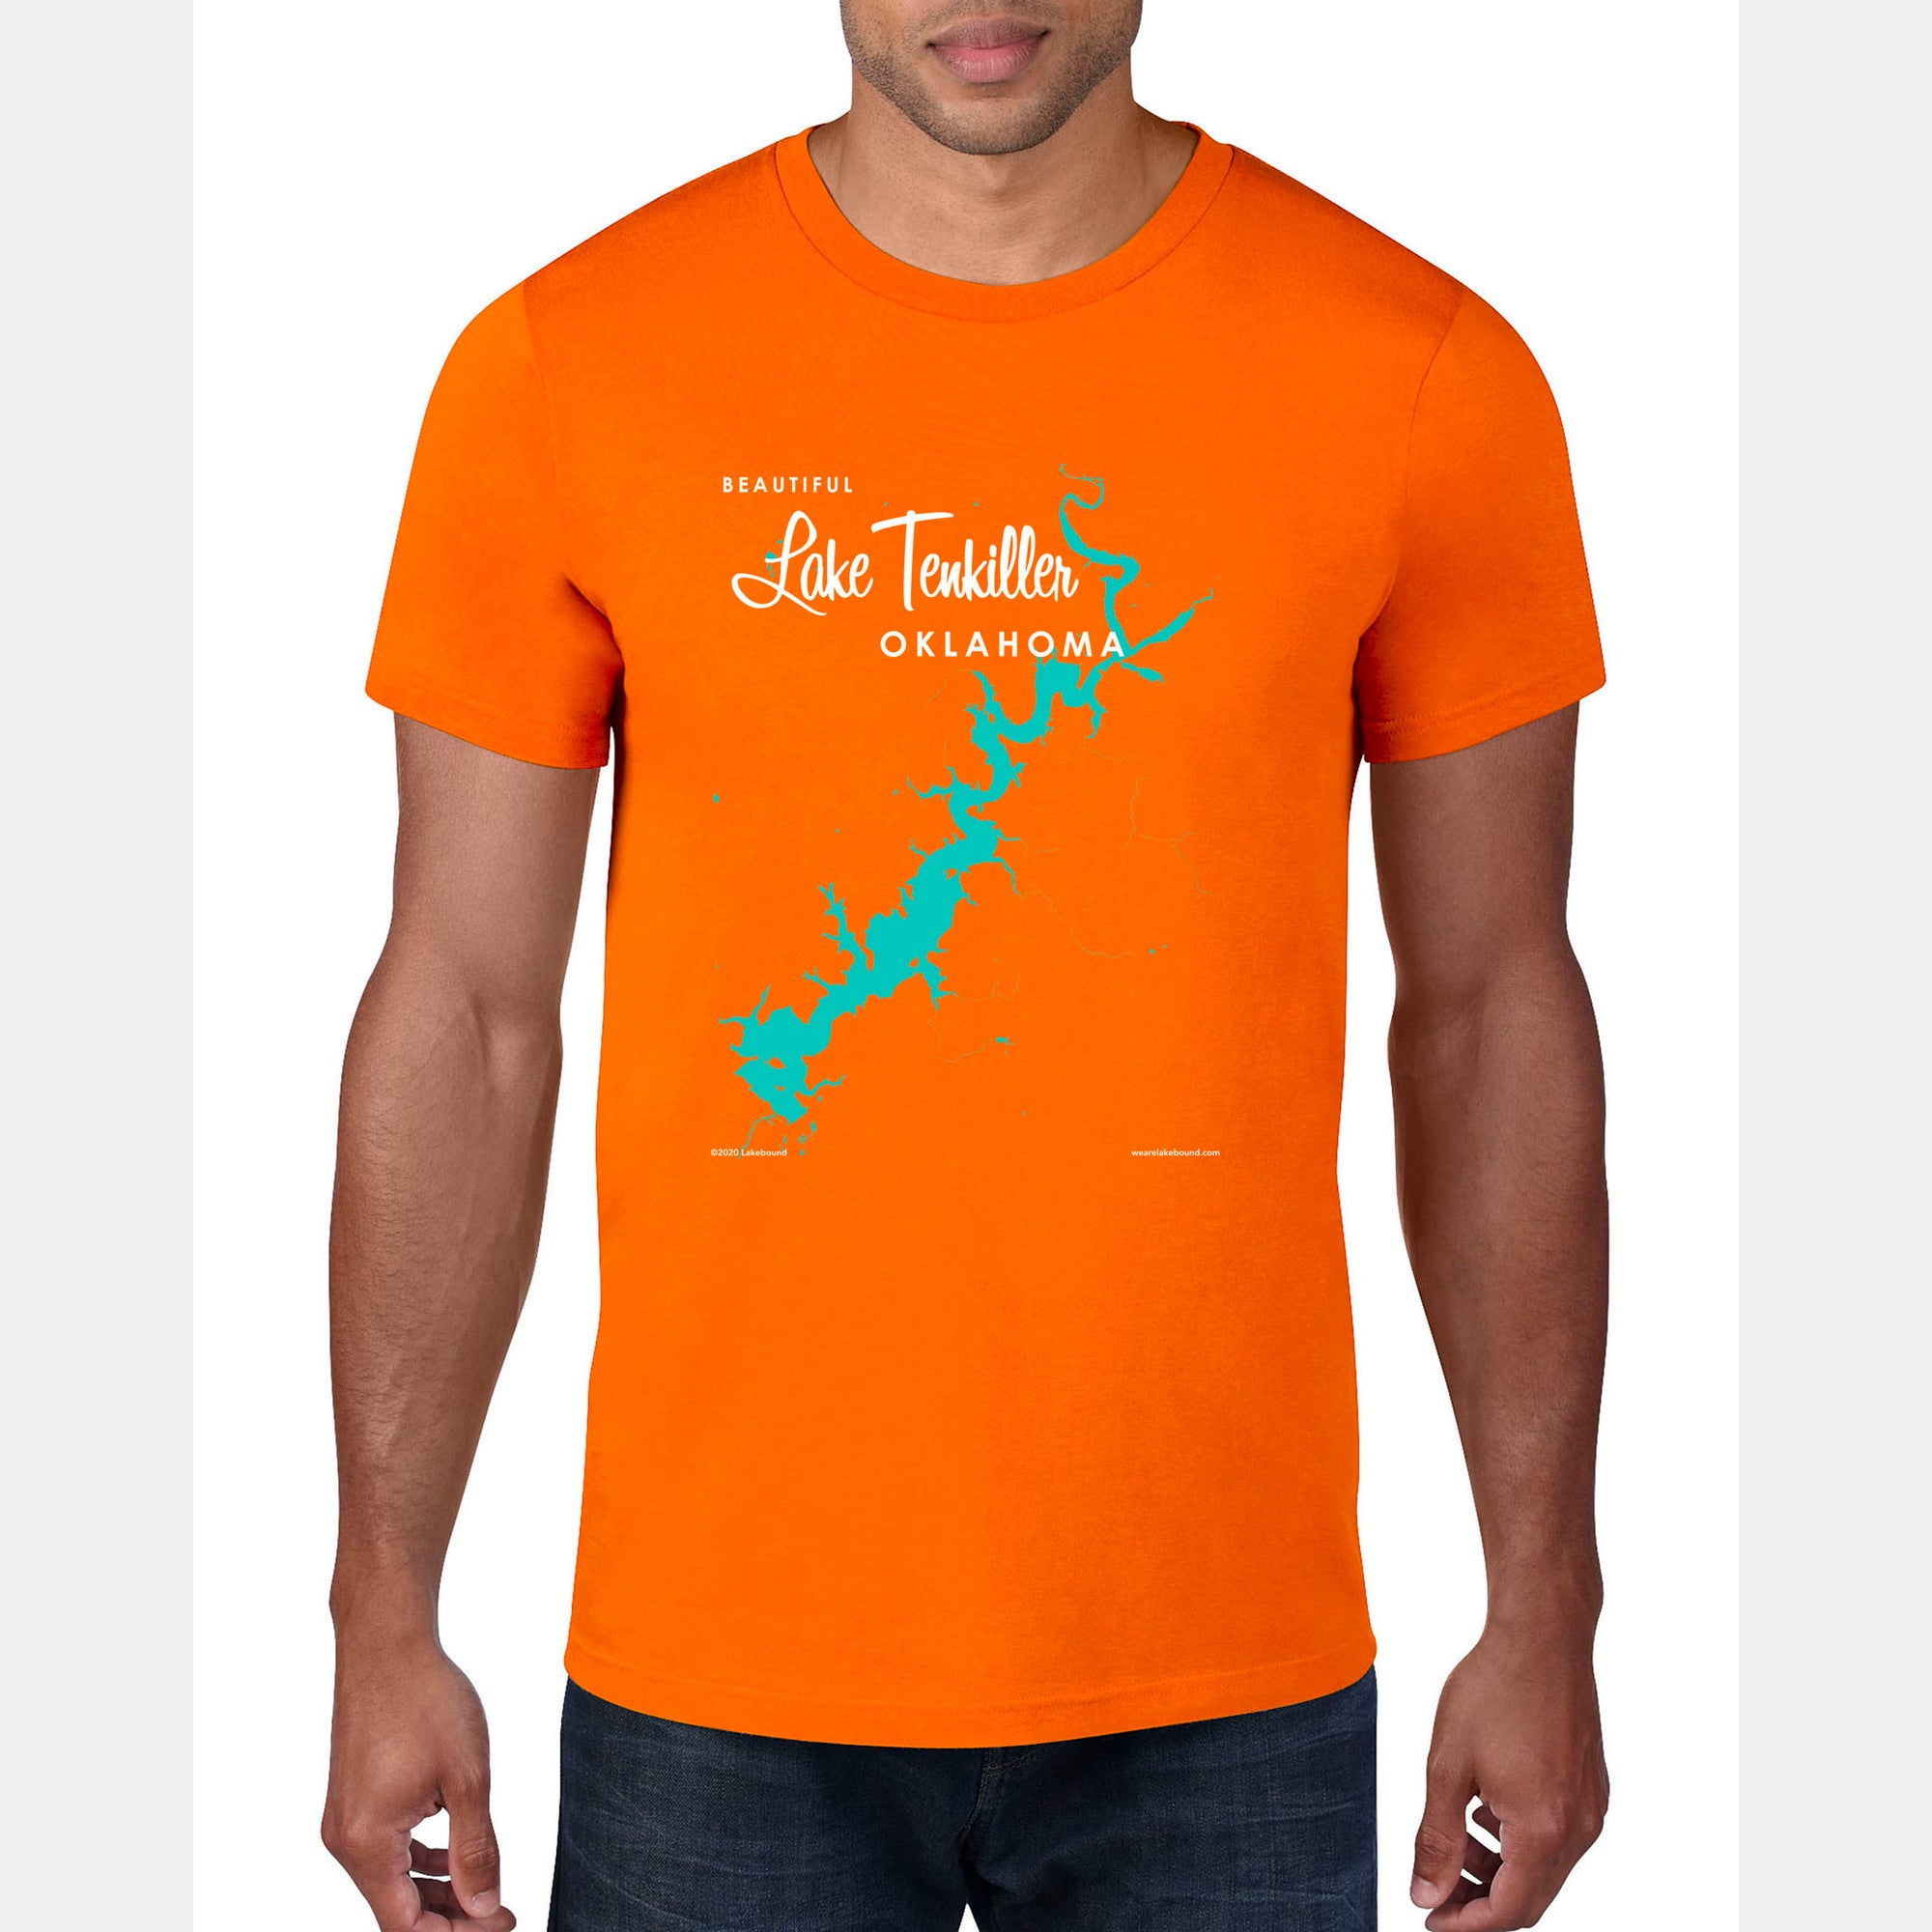 Lake Tenkiller Oklahoma, T-Shirt